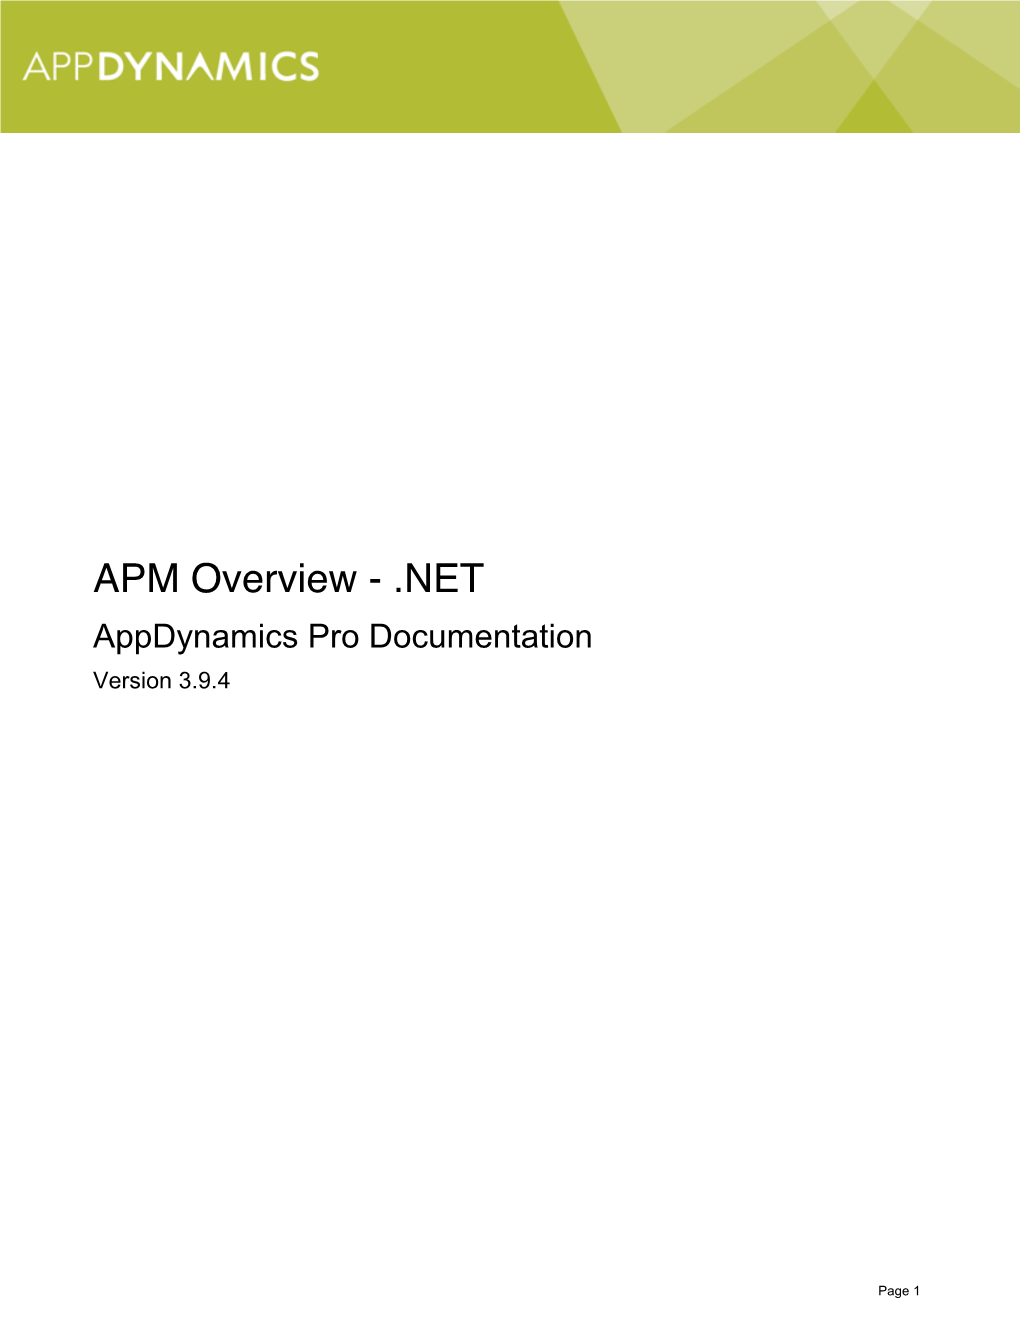 APM Overview - .NET Appdynamics Pro Documentation Version 3.9.4